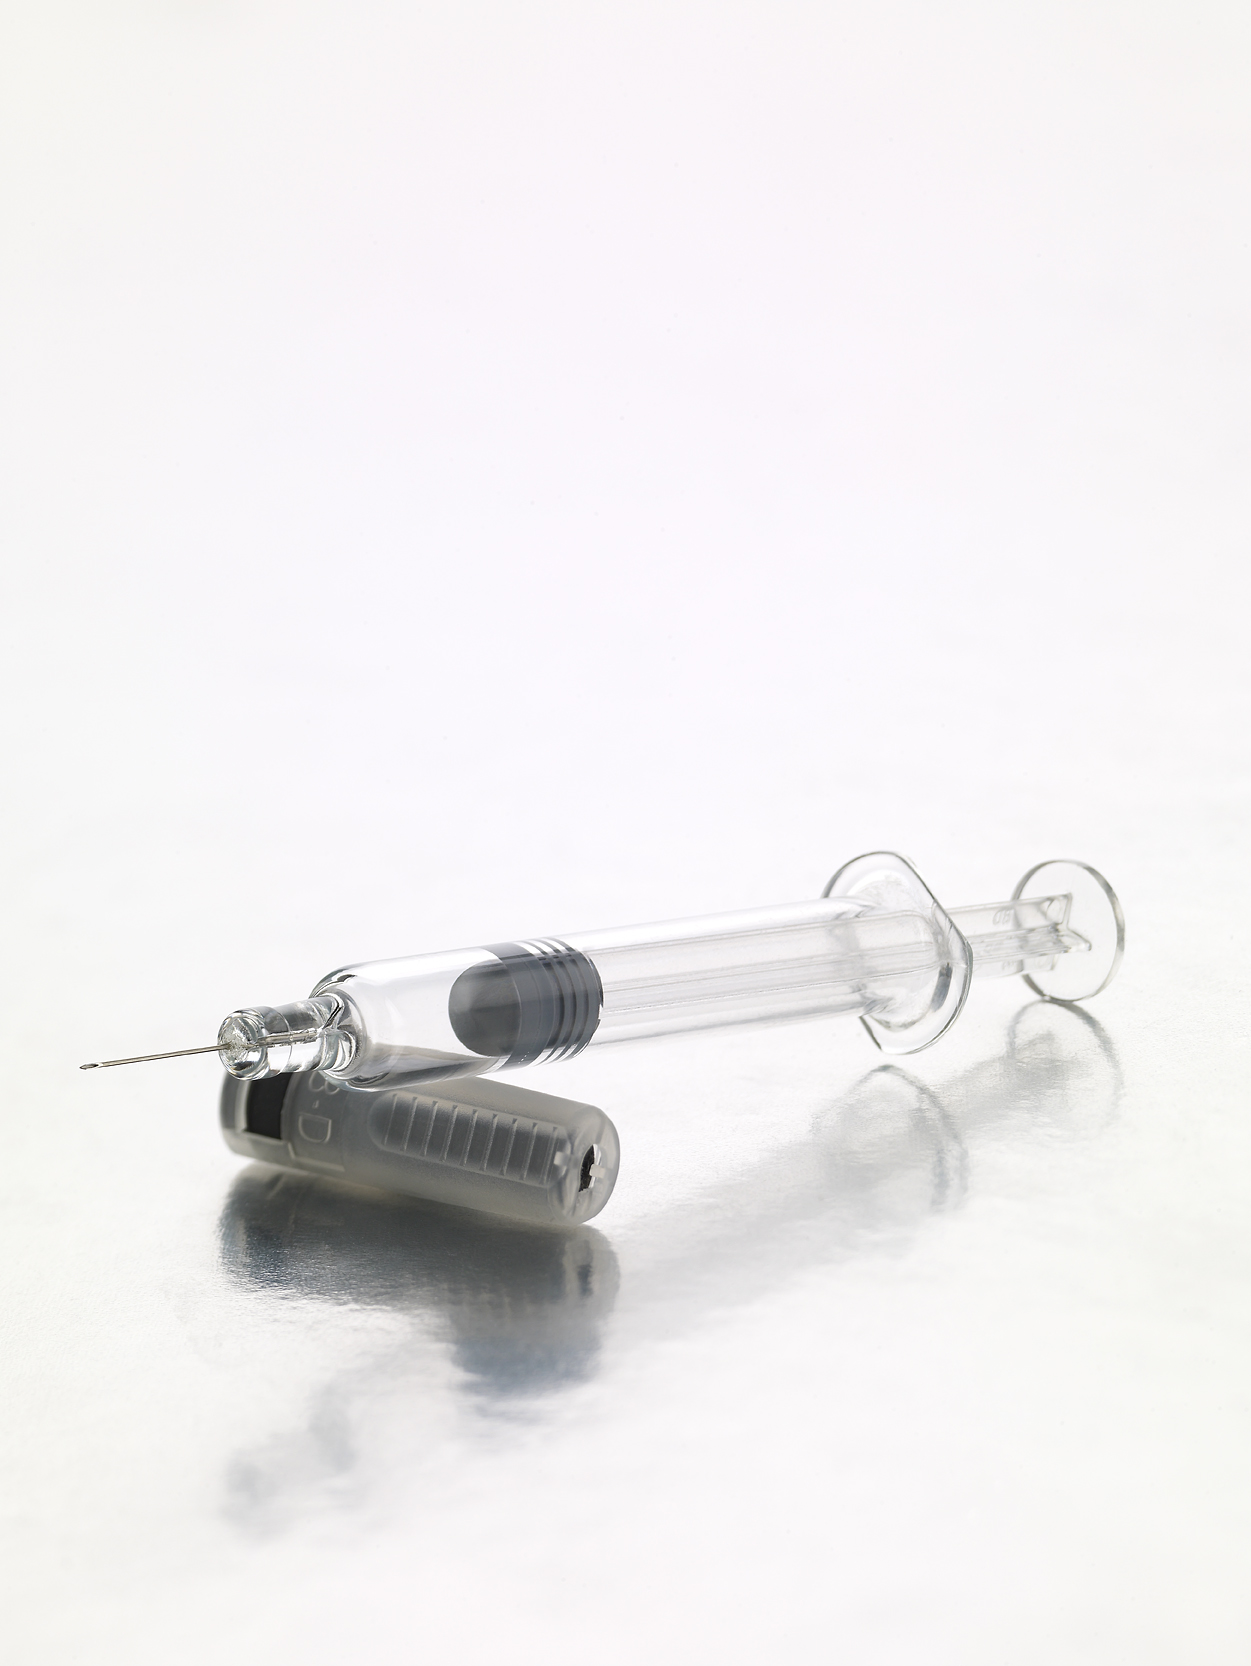 hypack syringe products